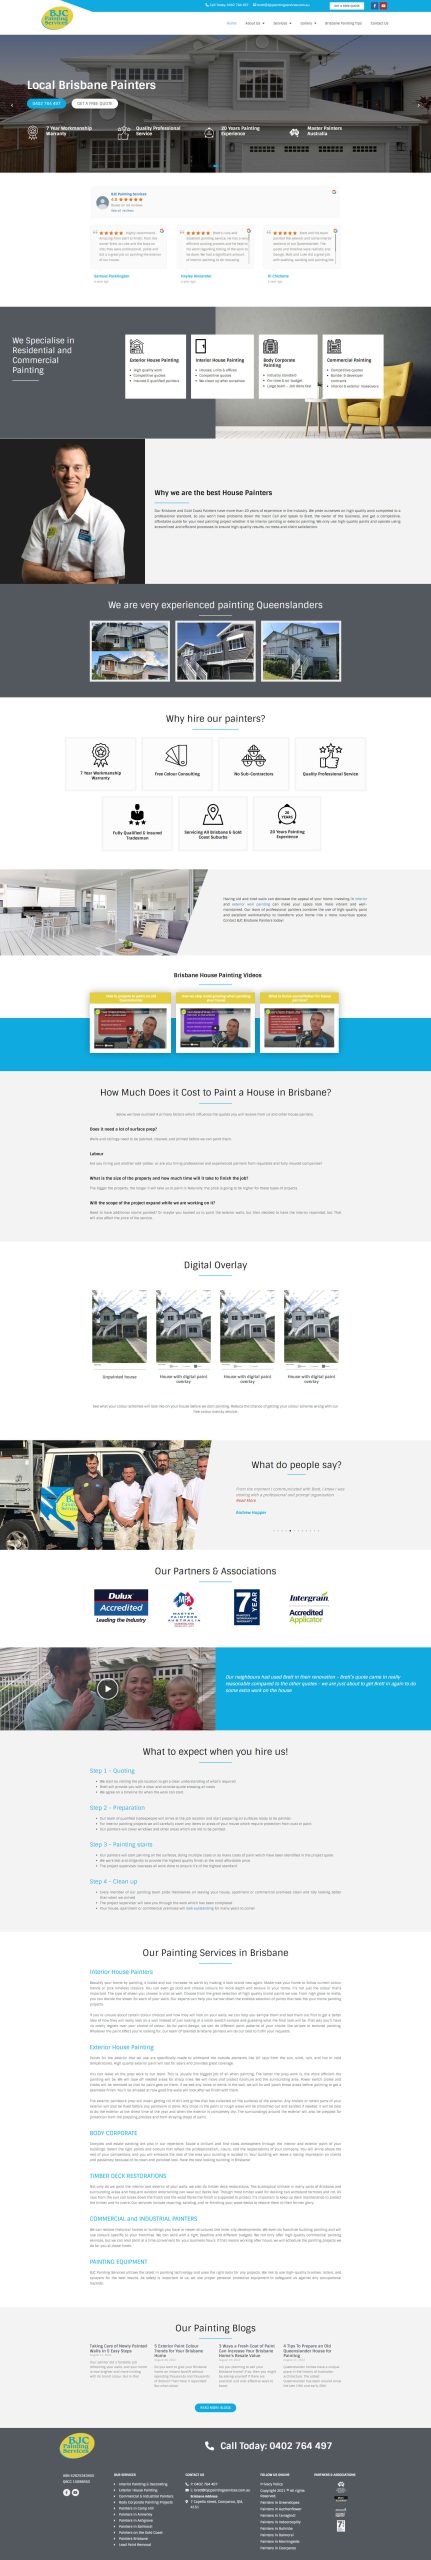 BJC Painting Services Web design template